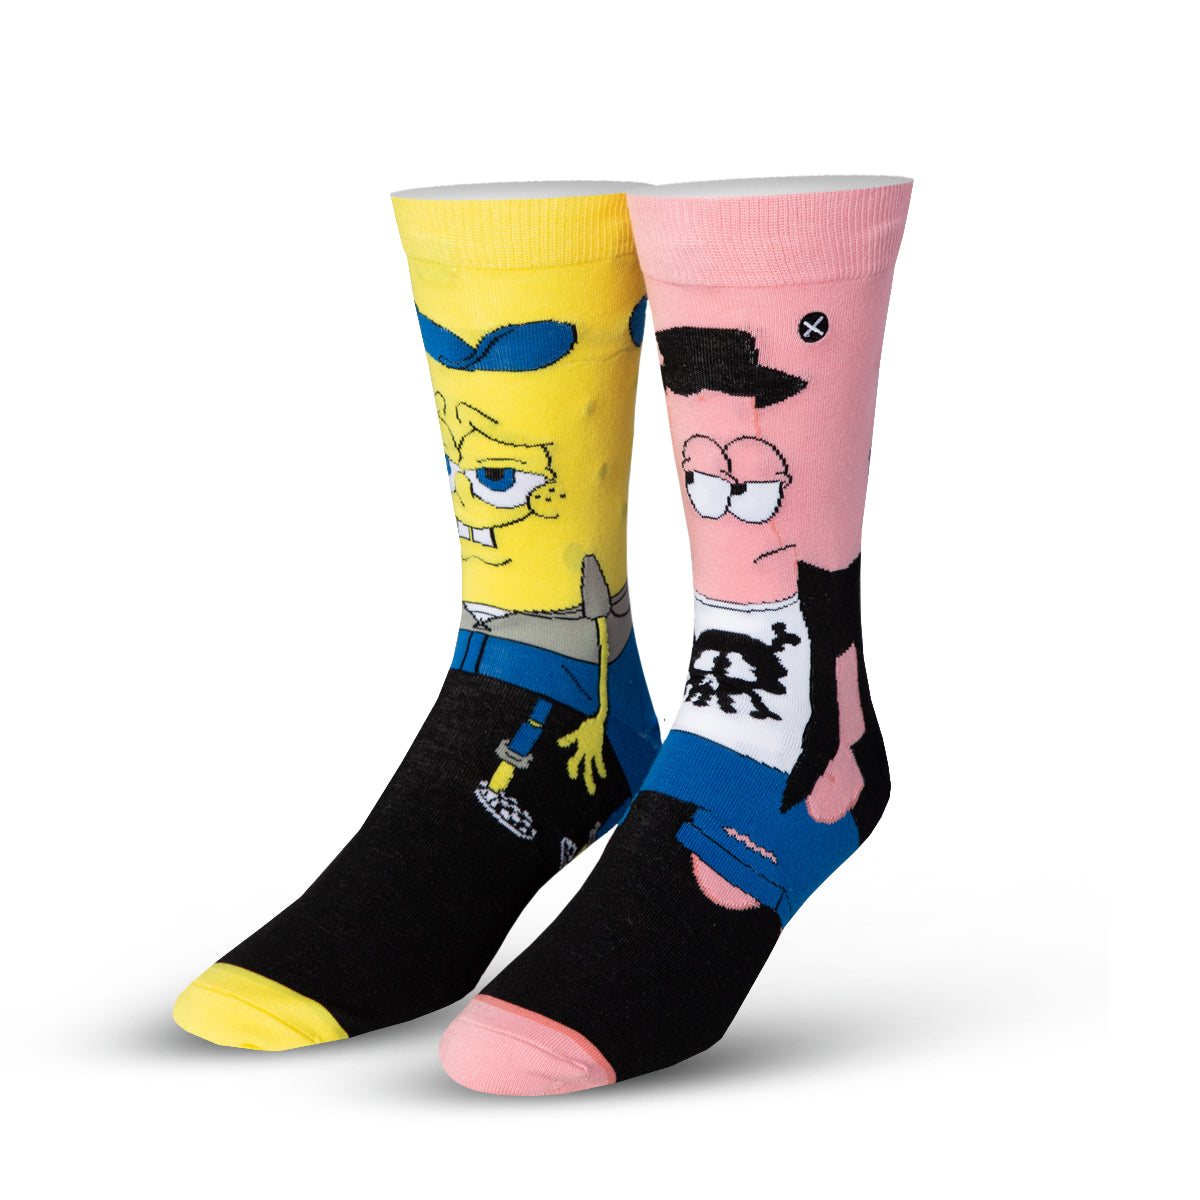 Spongebob SquarePants Mens Christmas Socks ‘Naughty or Nice’